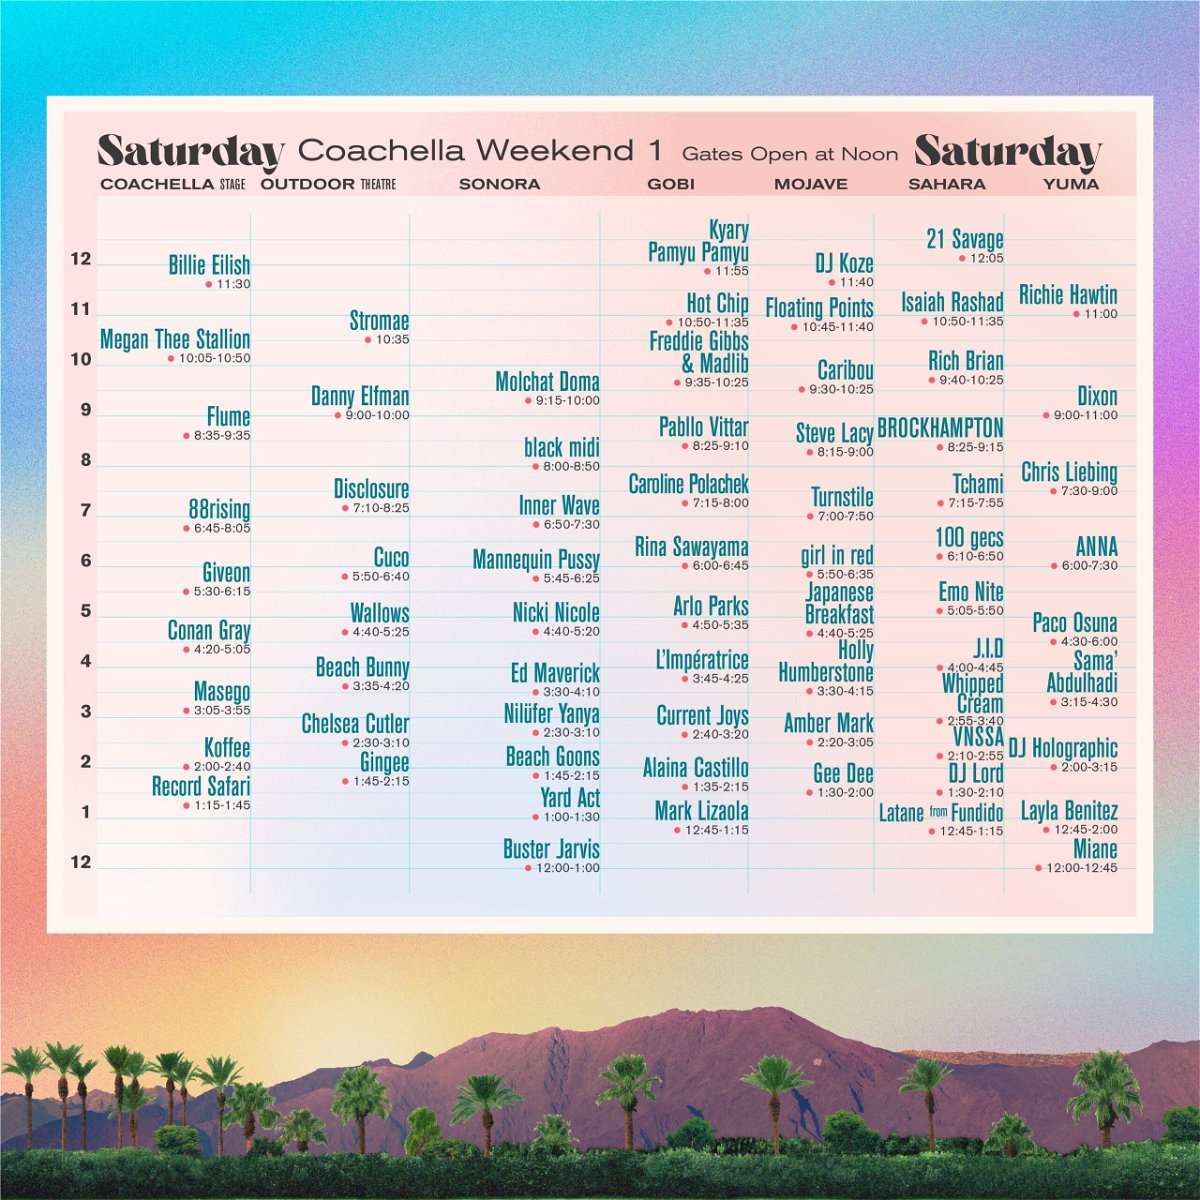 Coachella 2022 weekend 1 settimes released; Arcade Fire added to